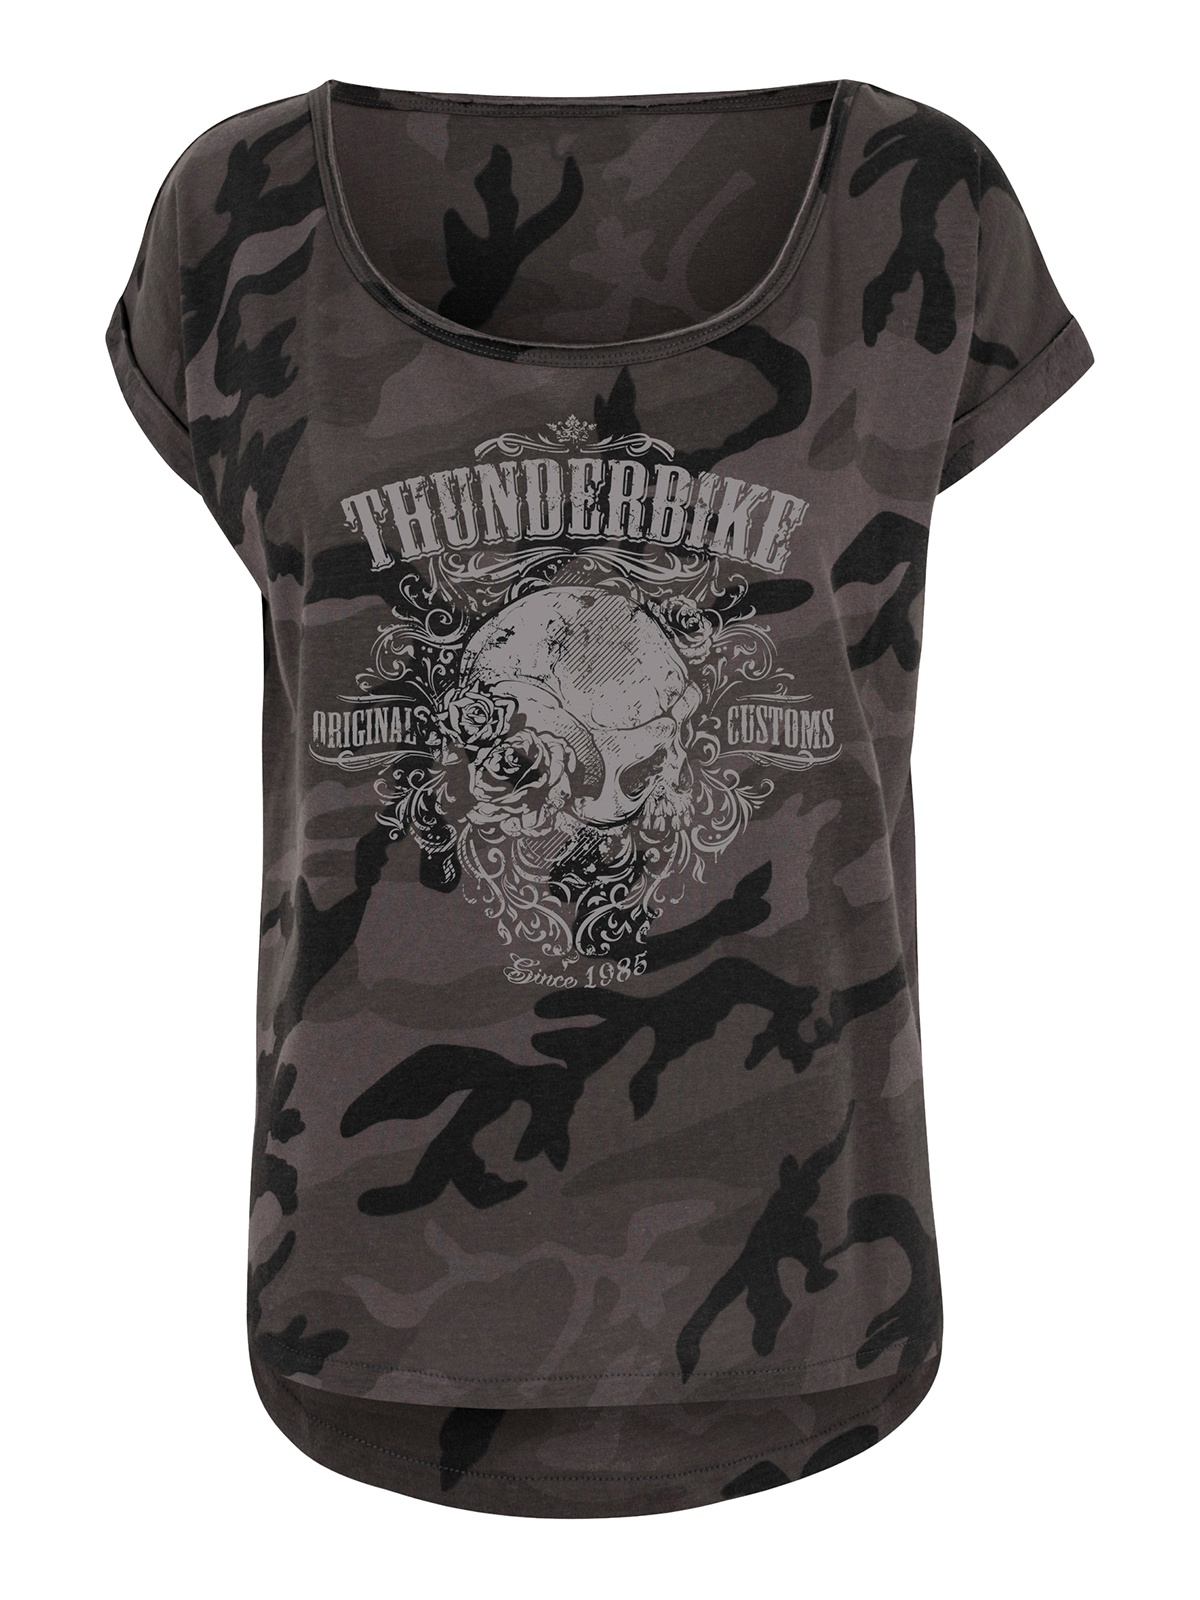 Thunderbike Damen T-Shirt Grunge Skull schwarz im Thunderbike Shop